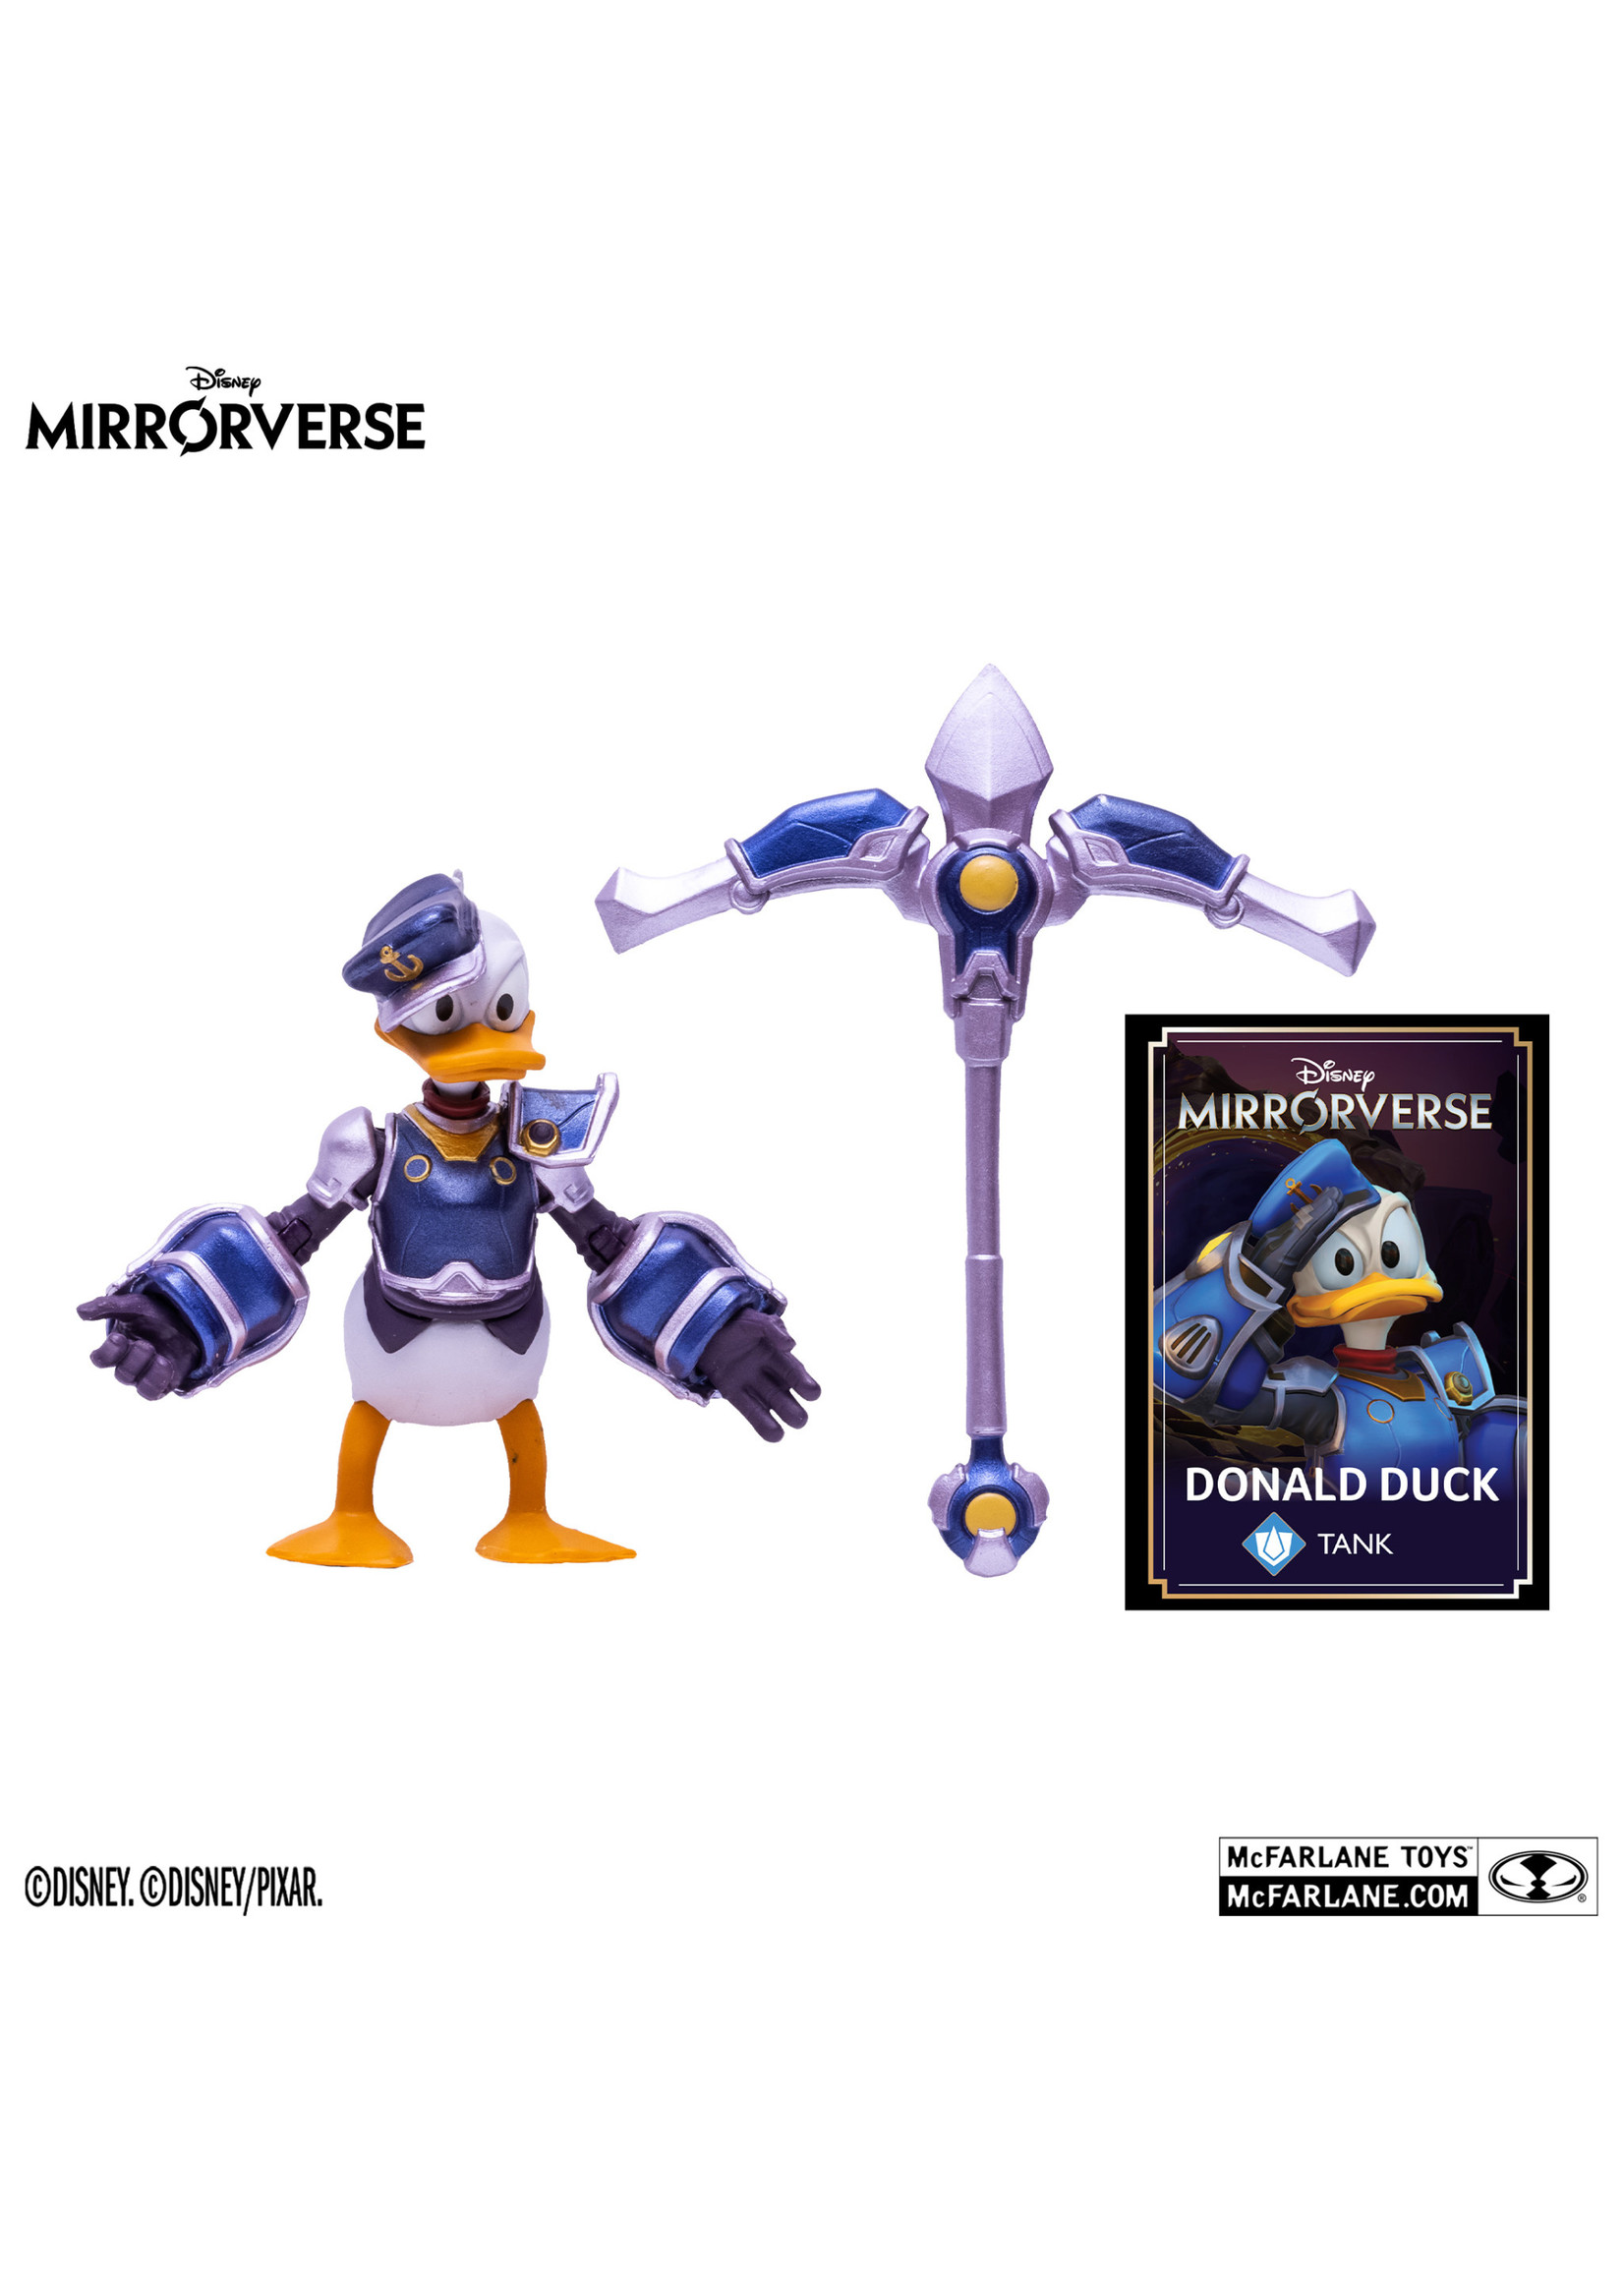 McFarlane toys Disney Mirrorverse - Donald duck (Tank)